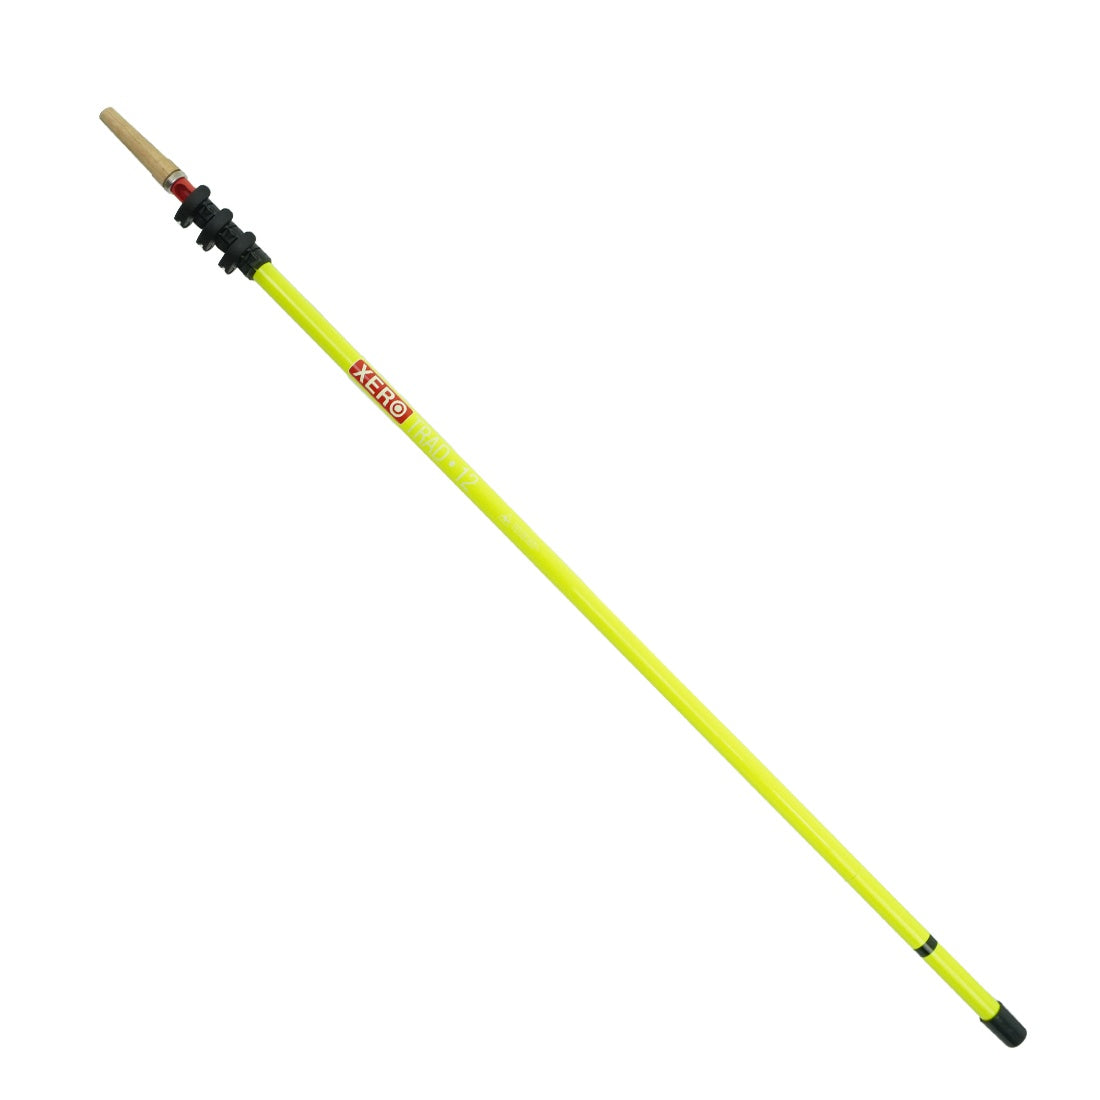 XERO Carbon Fiber Trad Pole 2.0 - Neon Yellow 12 Foot Full View